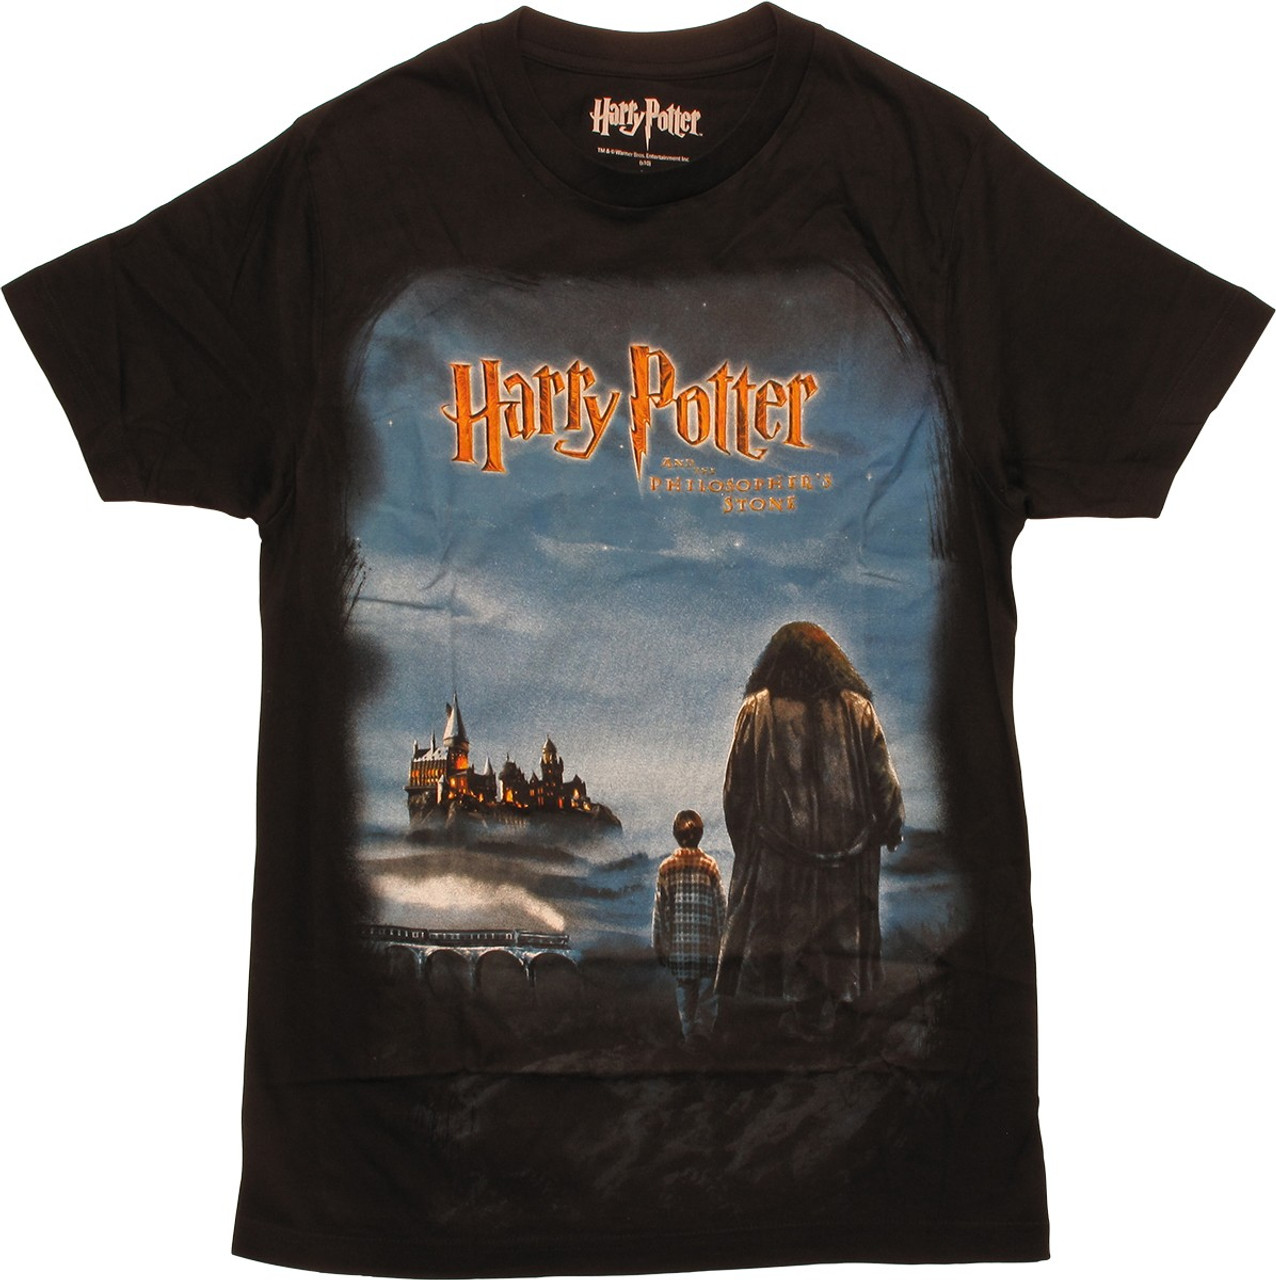 Harry Potter The Philosophers Stone Ladies Black T-Shirt